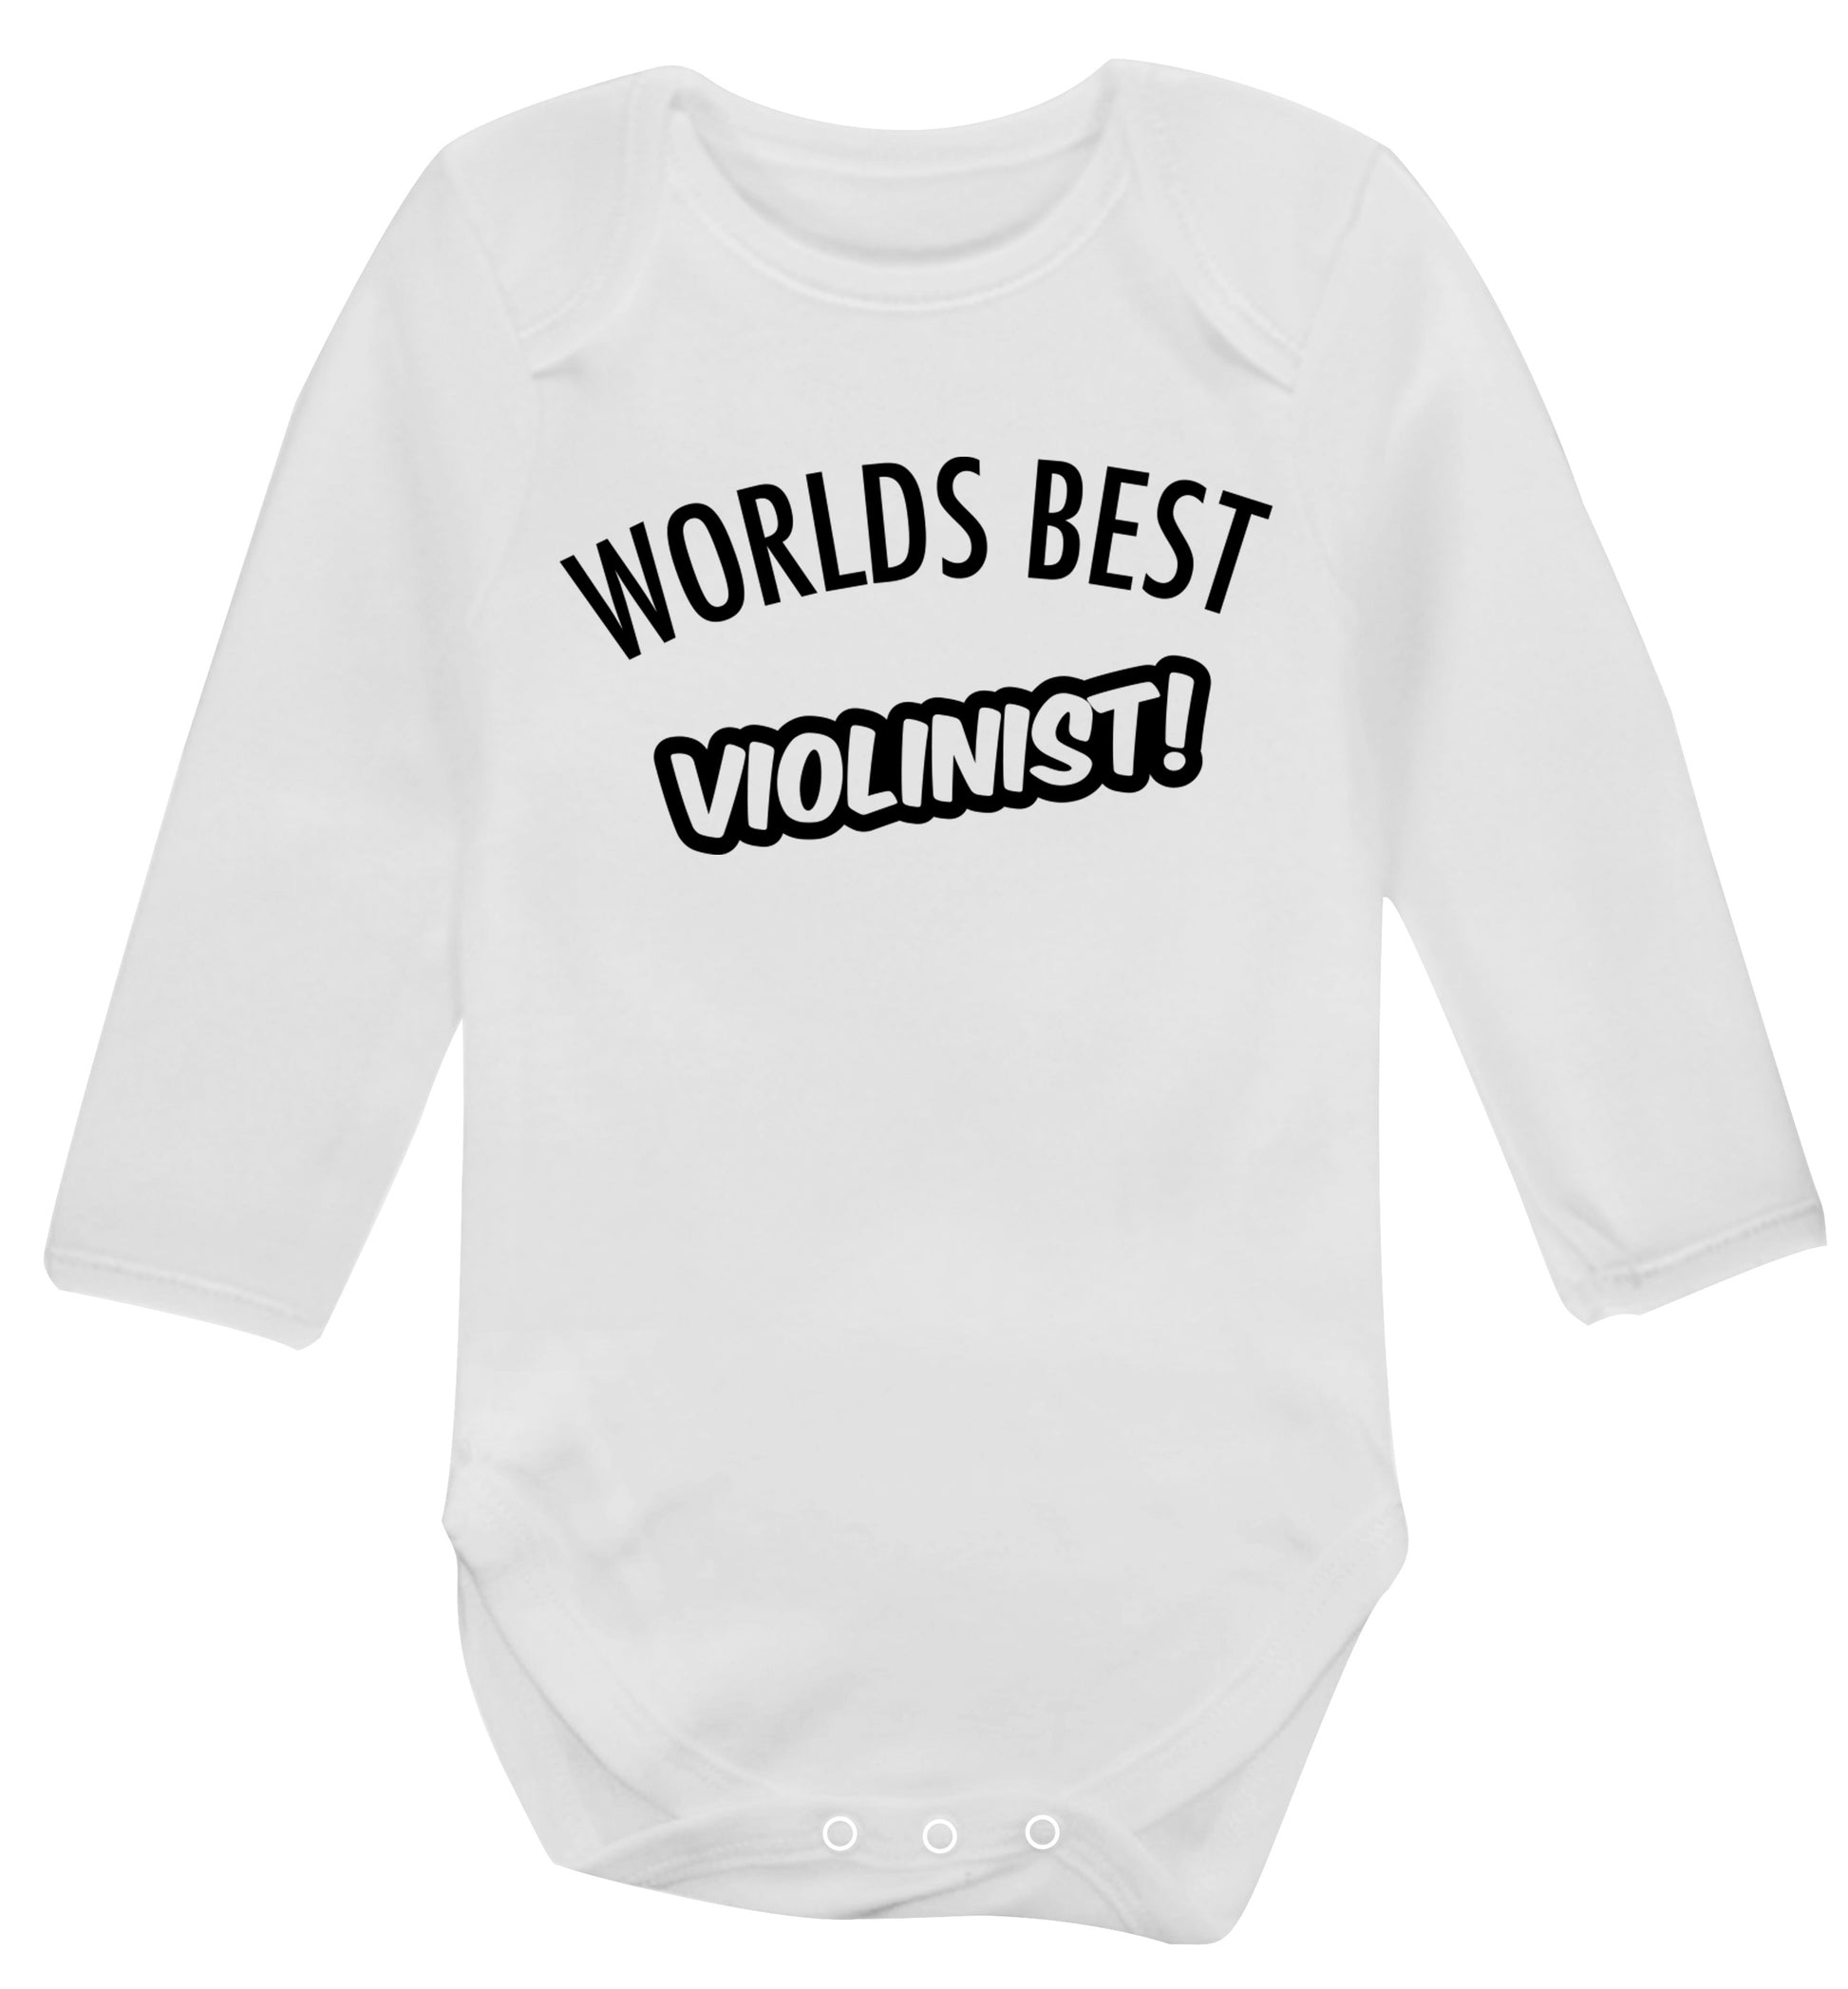 Worlds best violinist Baby Vest long sleeved white 6-12 months